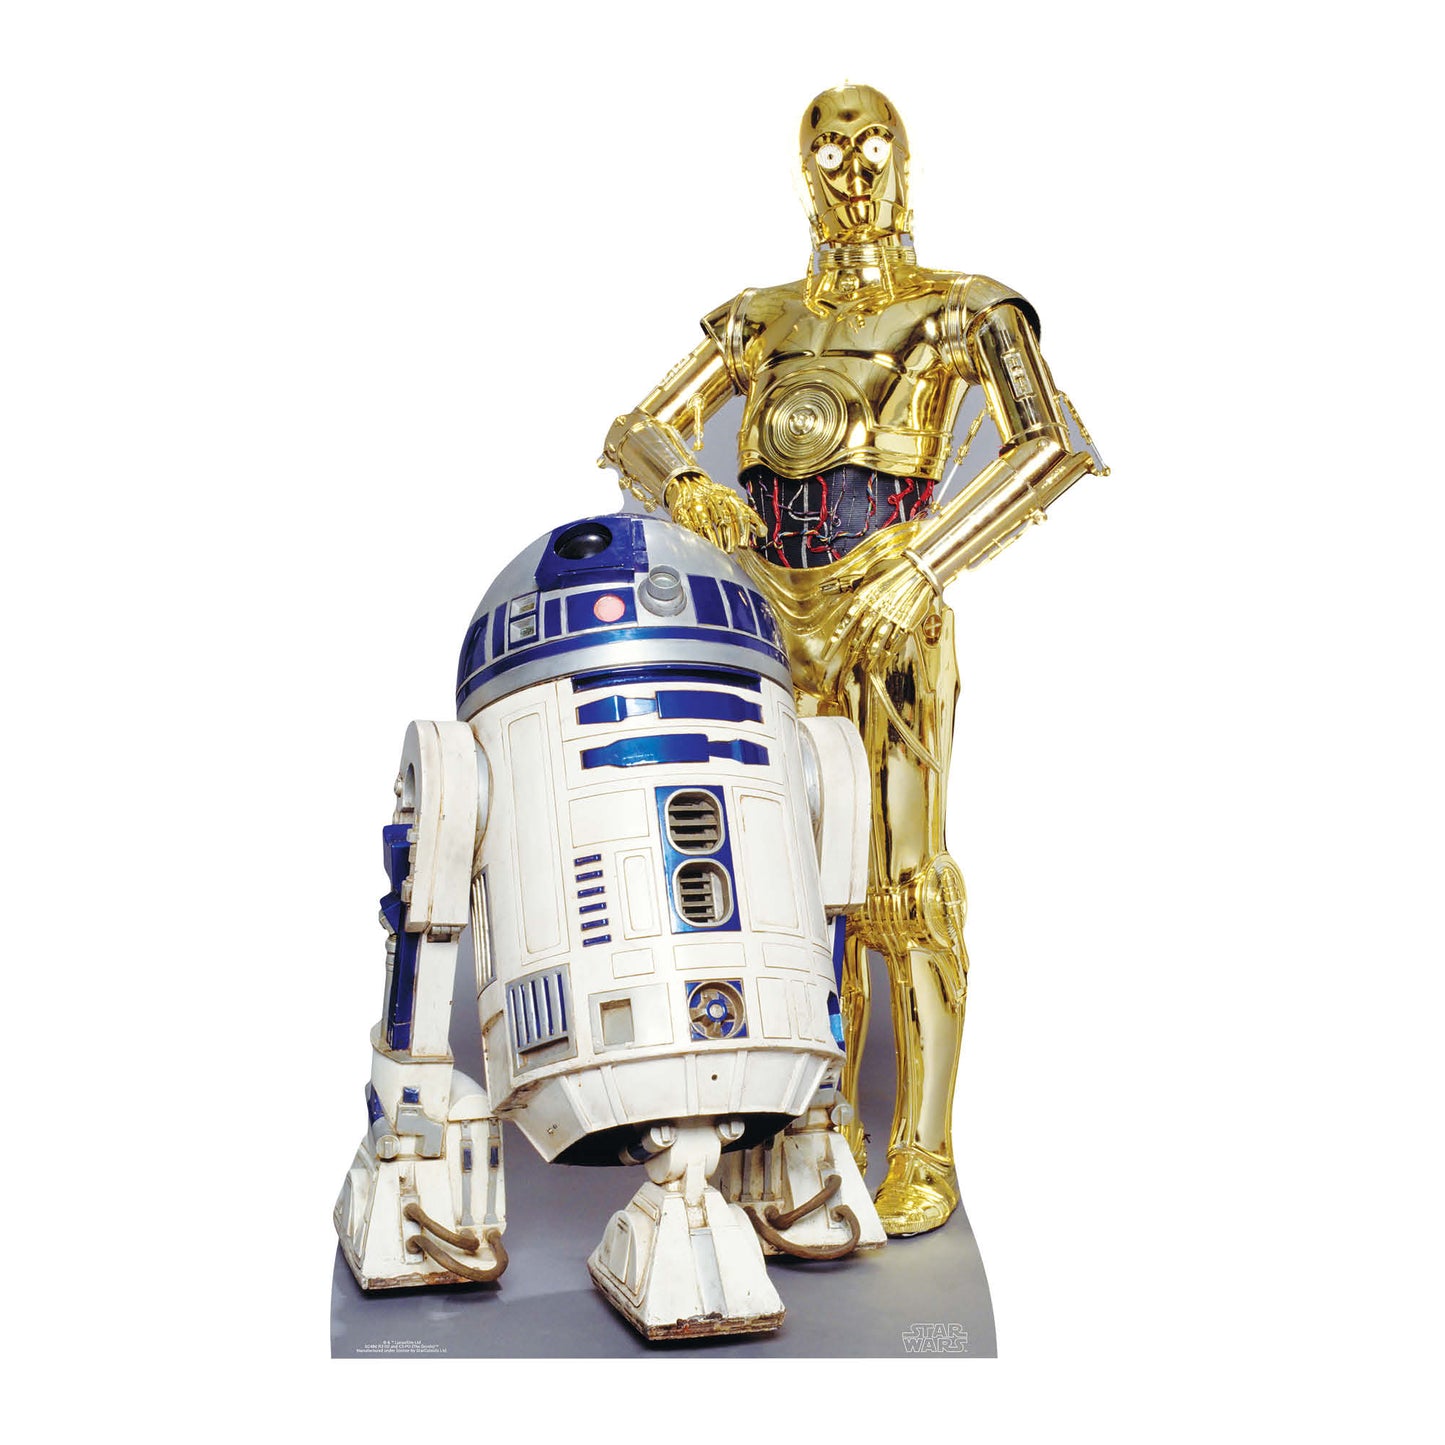 The Droids R2D2 C3PO Star Wars Cardboard Cutout